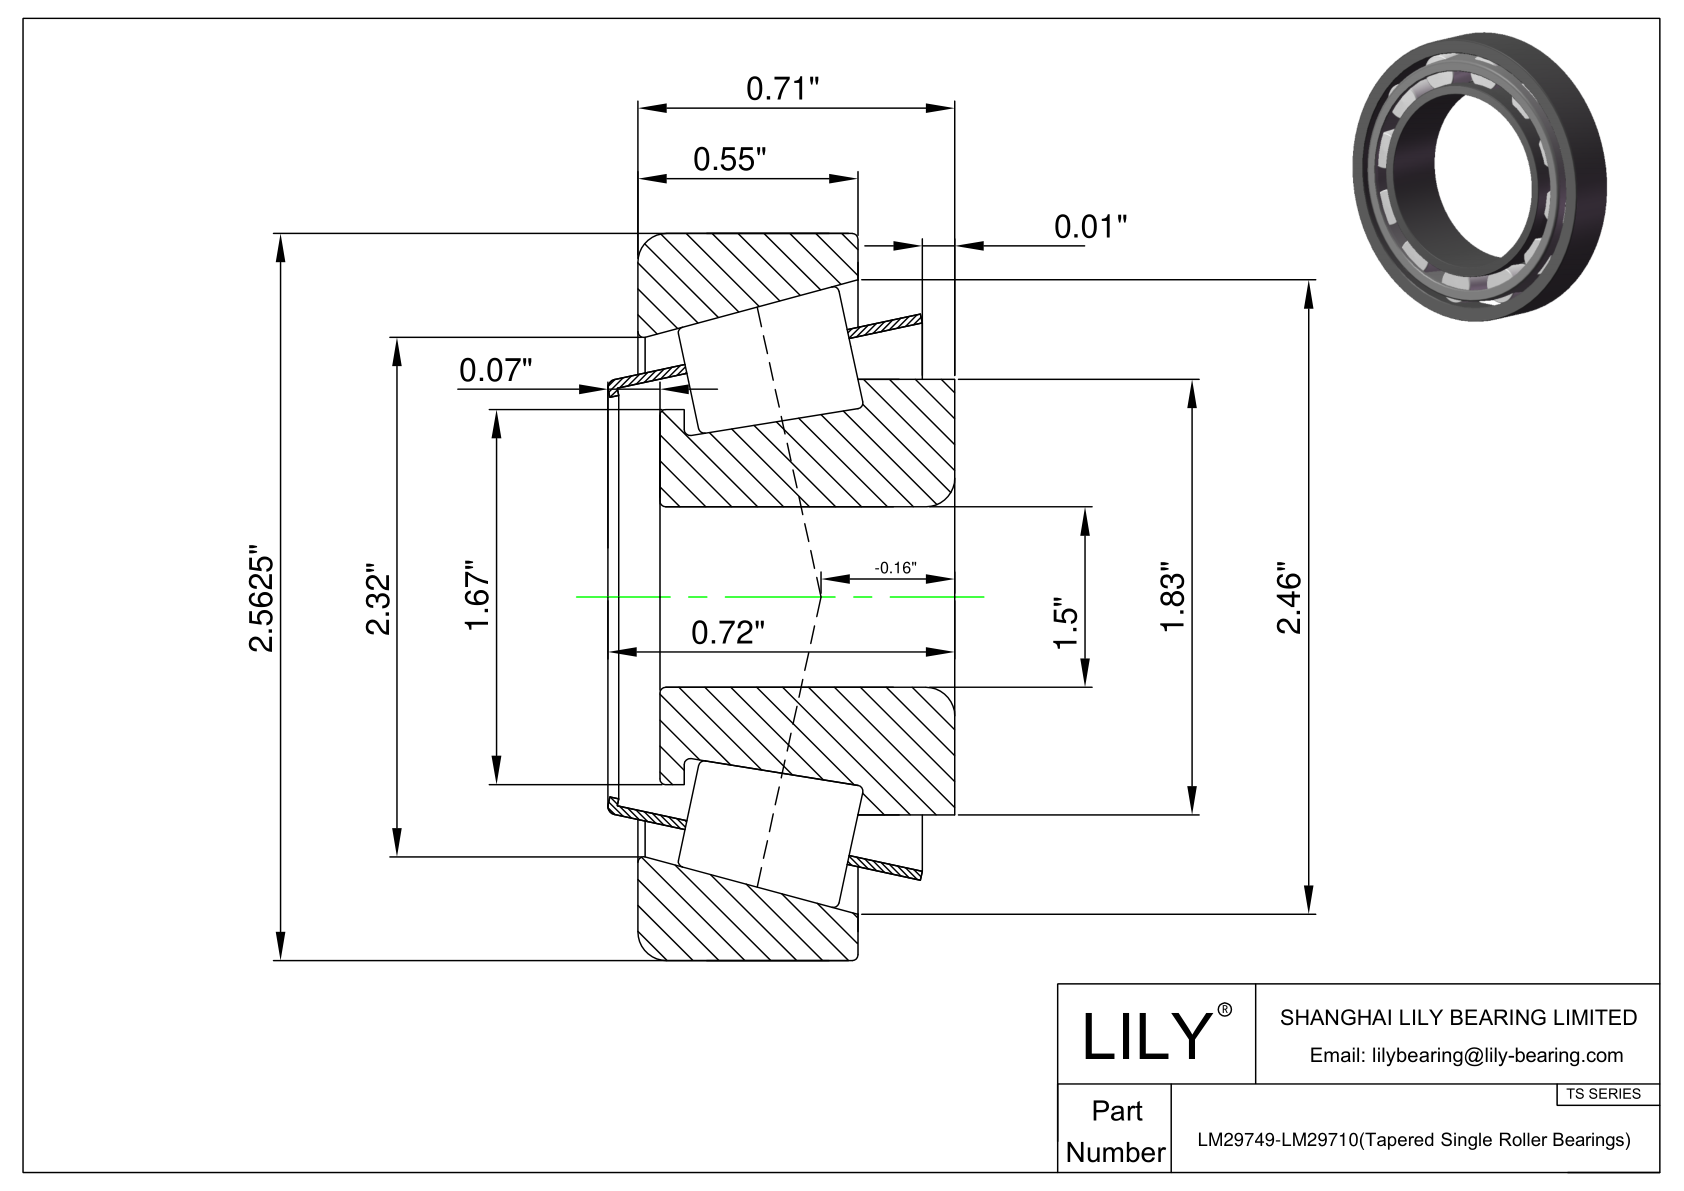 LM29749-LM29710 TS系列(圆锥单滚子轴承)(英制) CAD图形